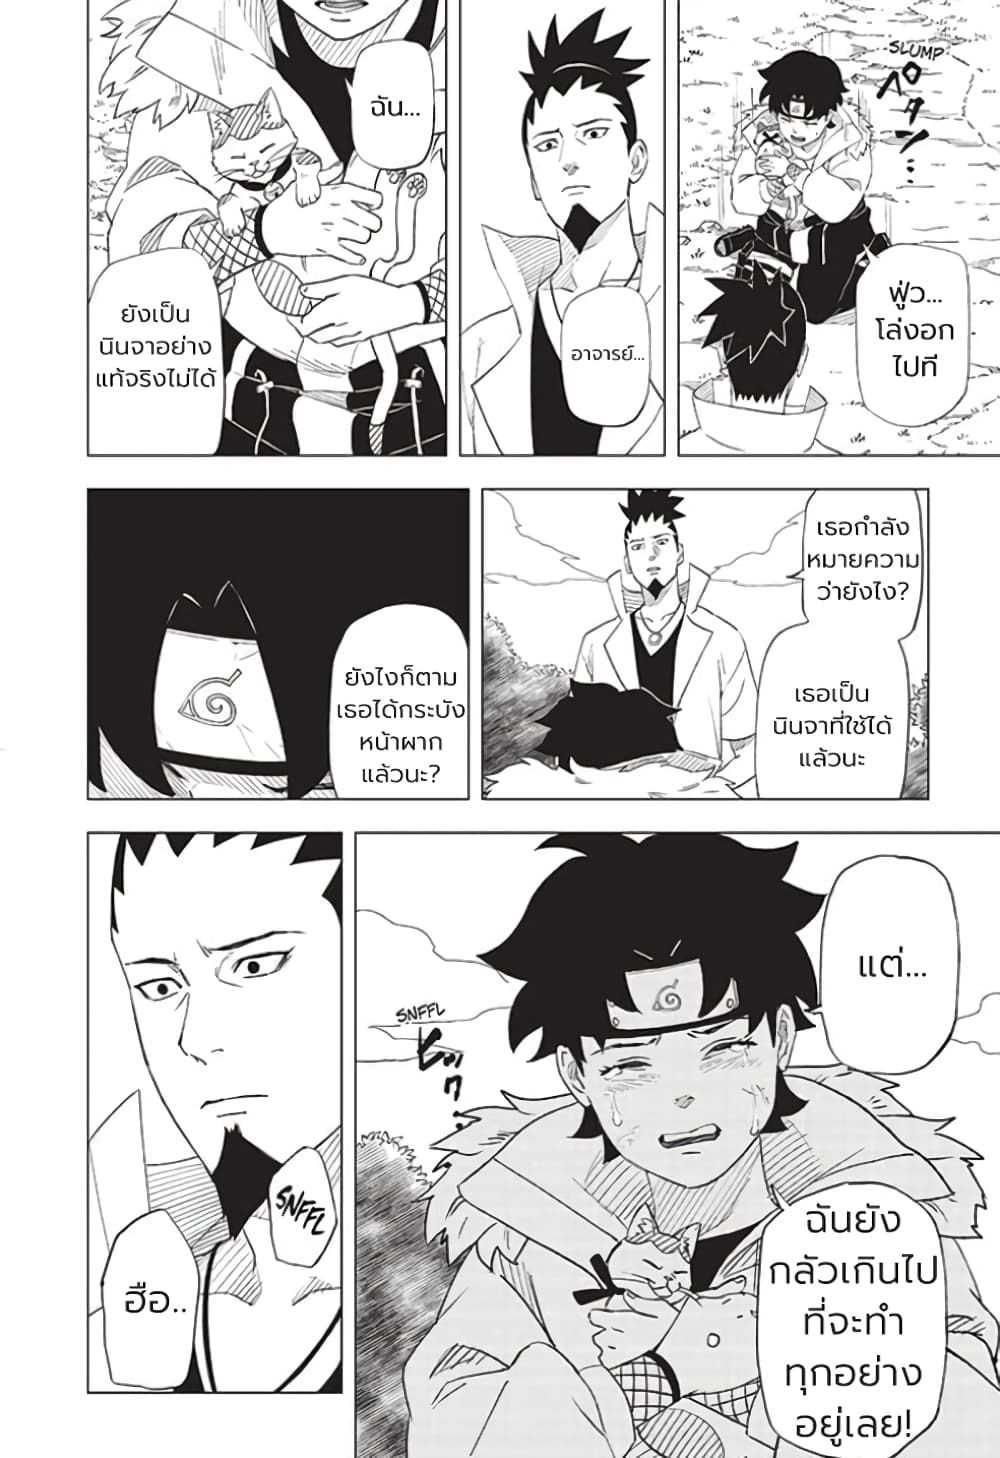 Naruto: Konoha's Story - The Steam Ninja Scrolls: The Manga 1-ซารุโทบิ มิไร